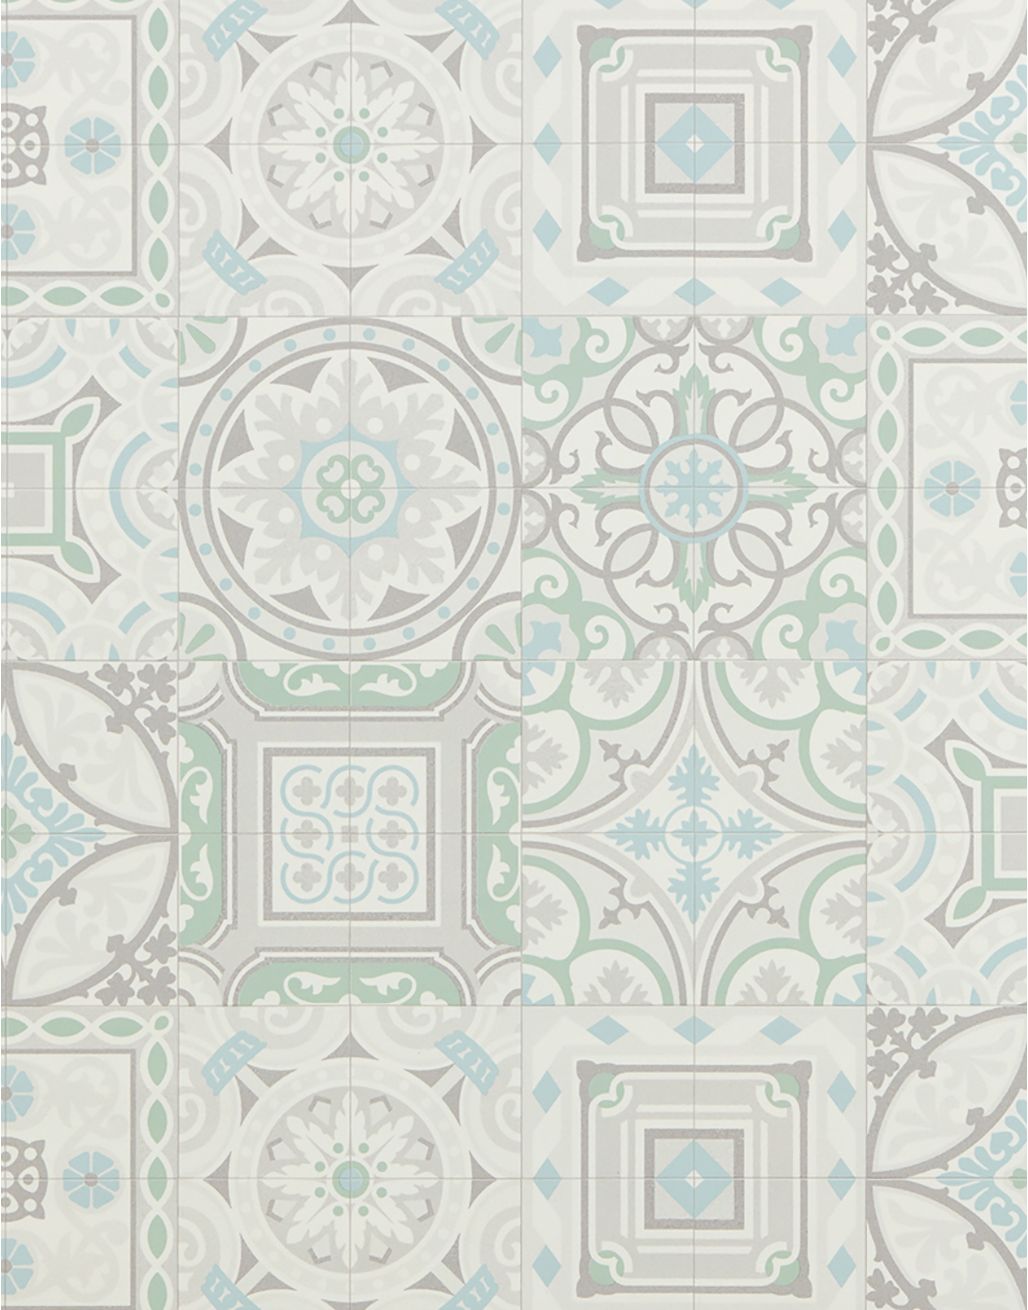 Patterned Tiles - Antique 3